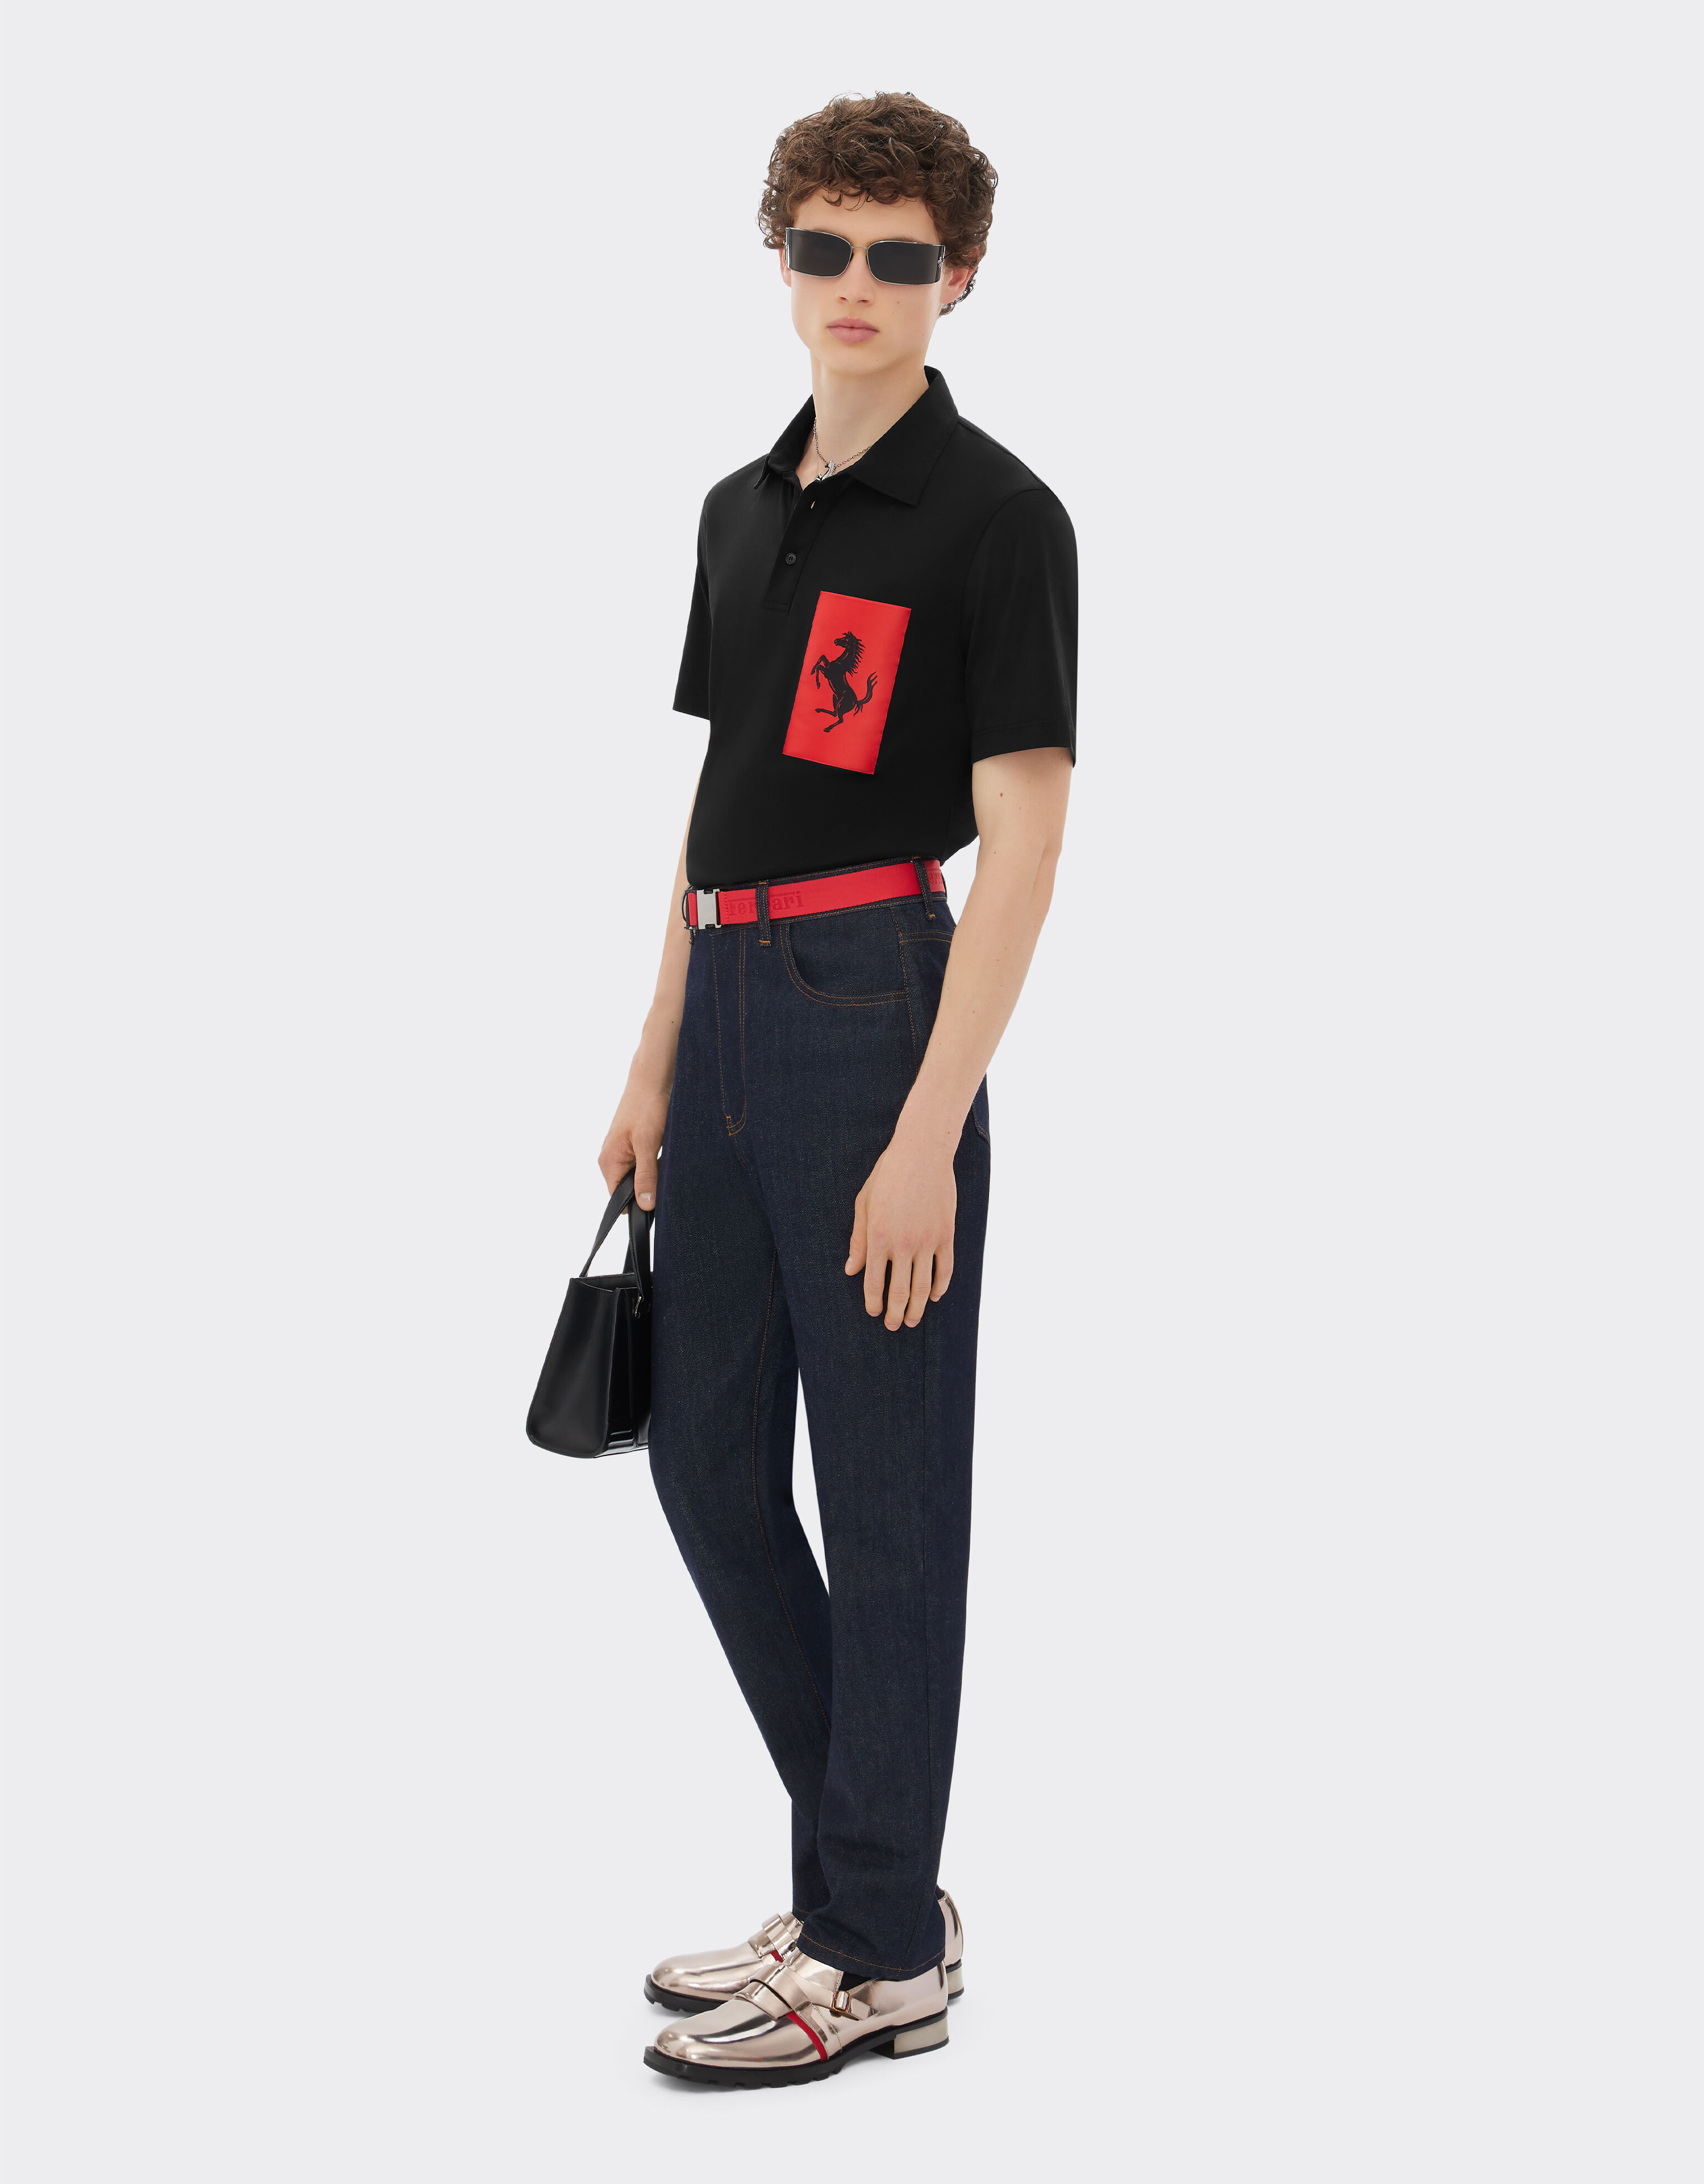 Ferrari Cotton polo shirt with Prancing Horse pocket Black 47821f